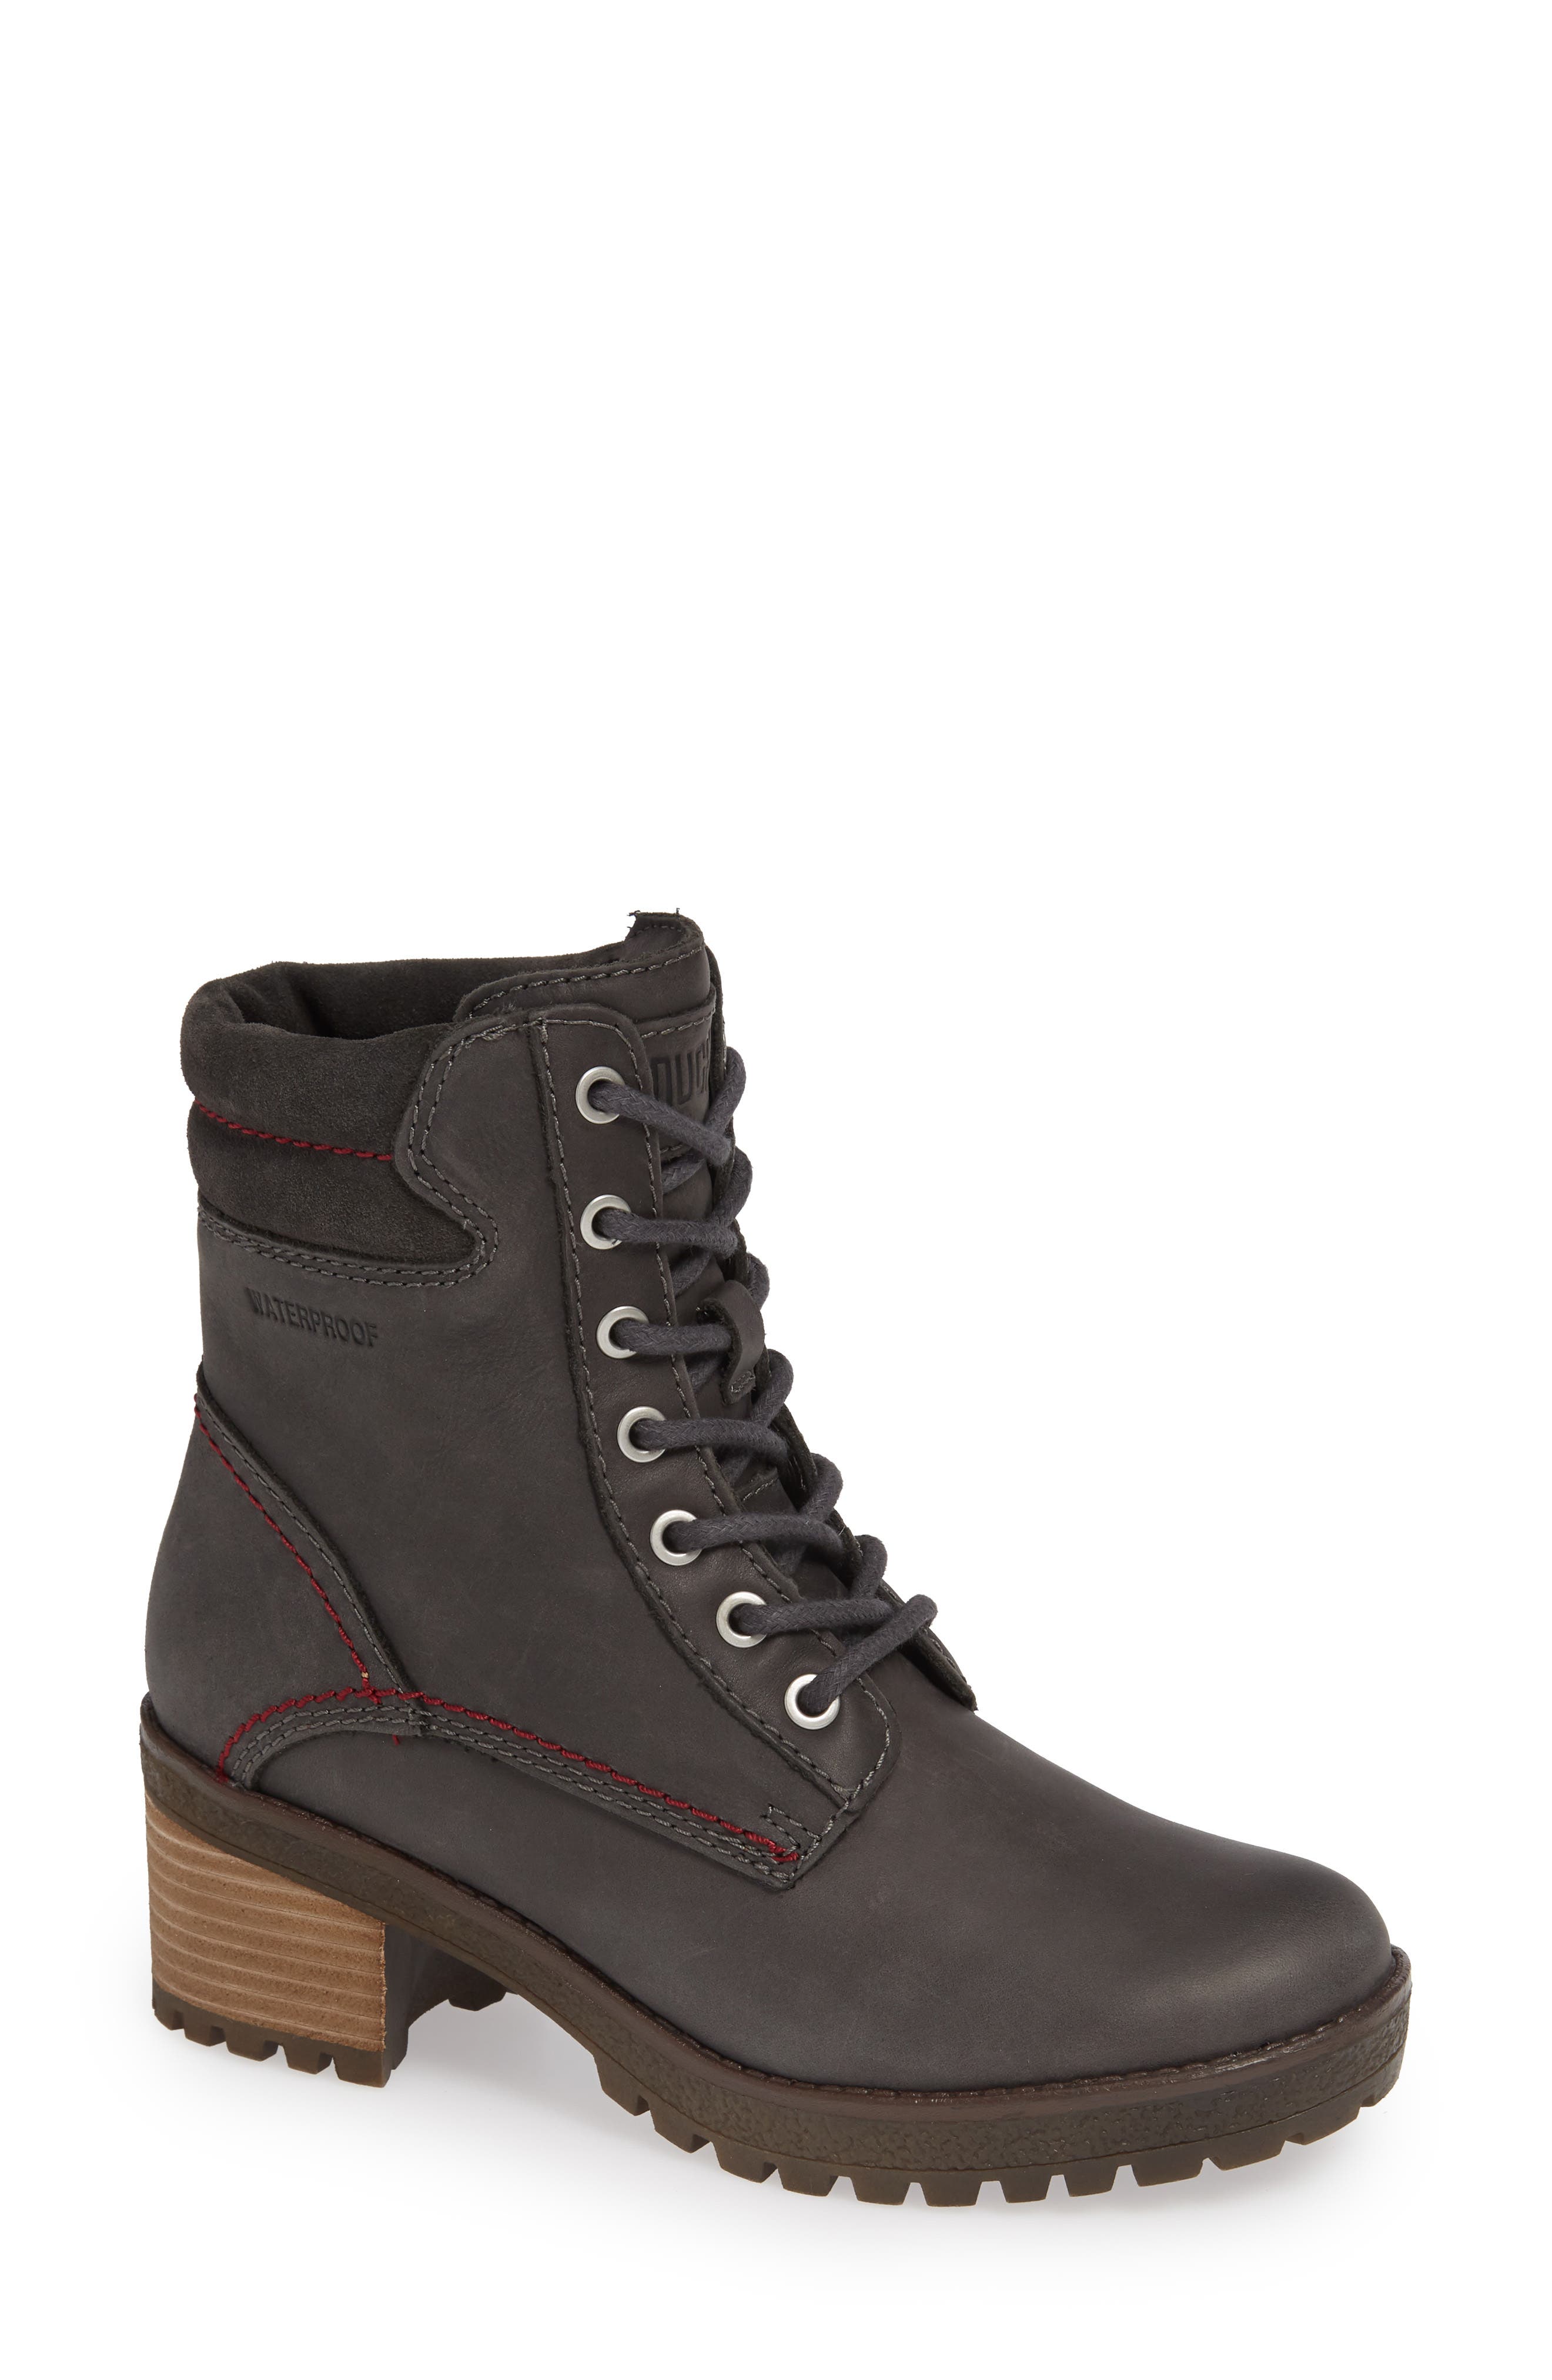 cougar danbury waterproof leather boots